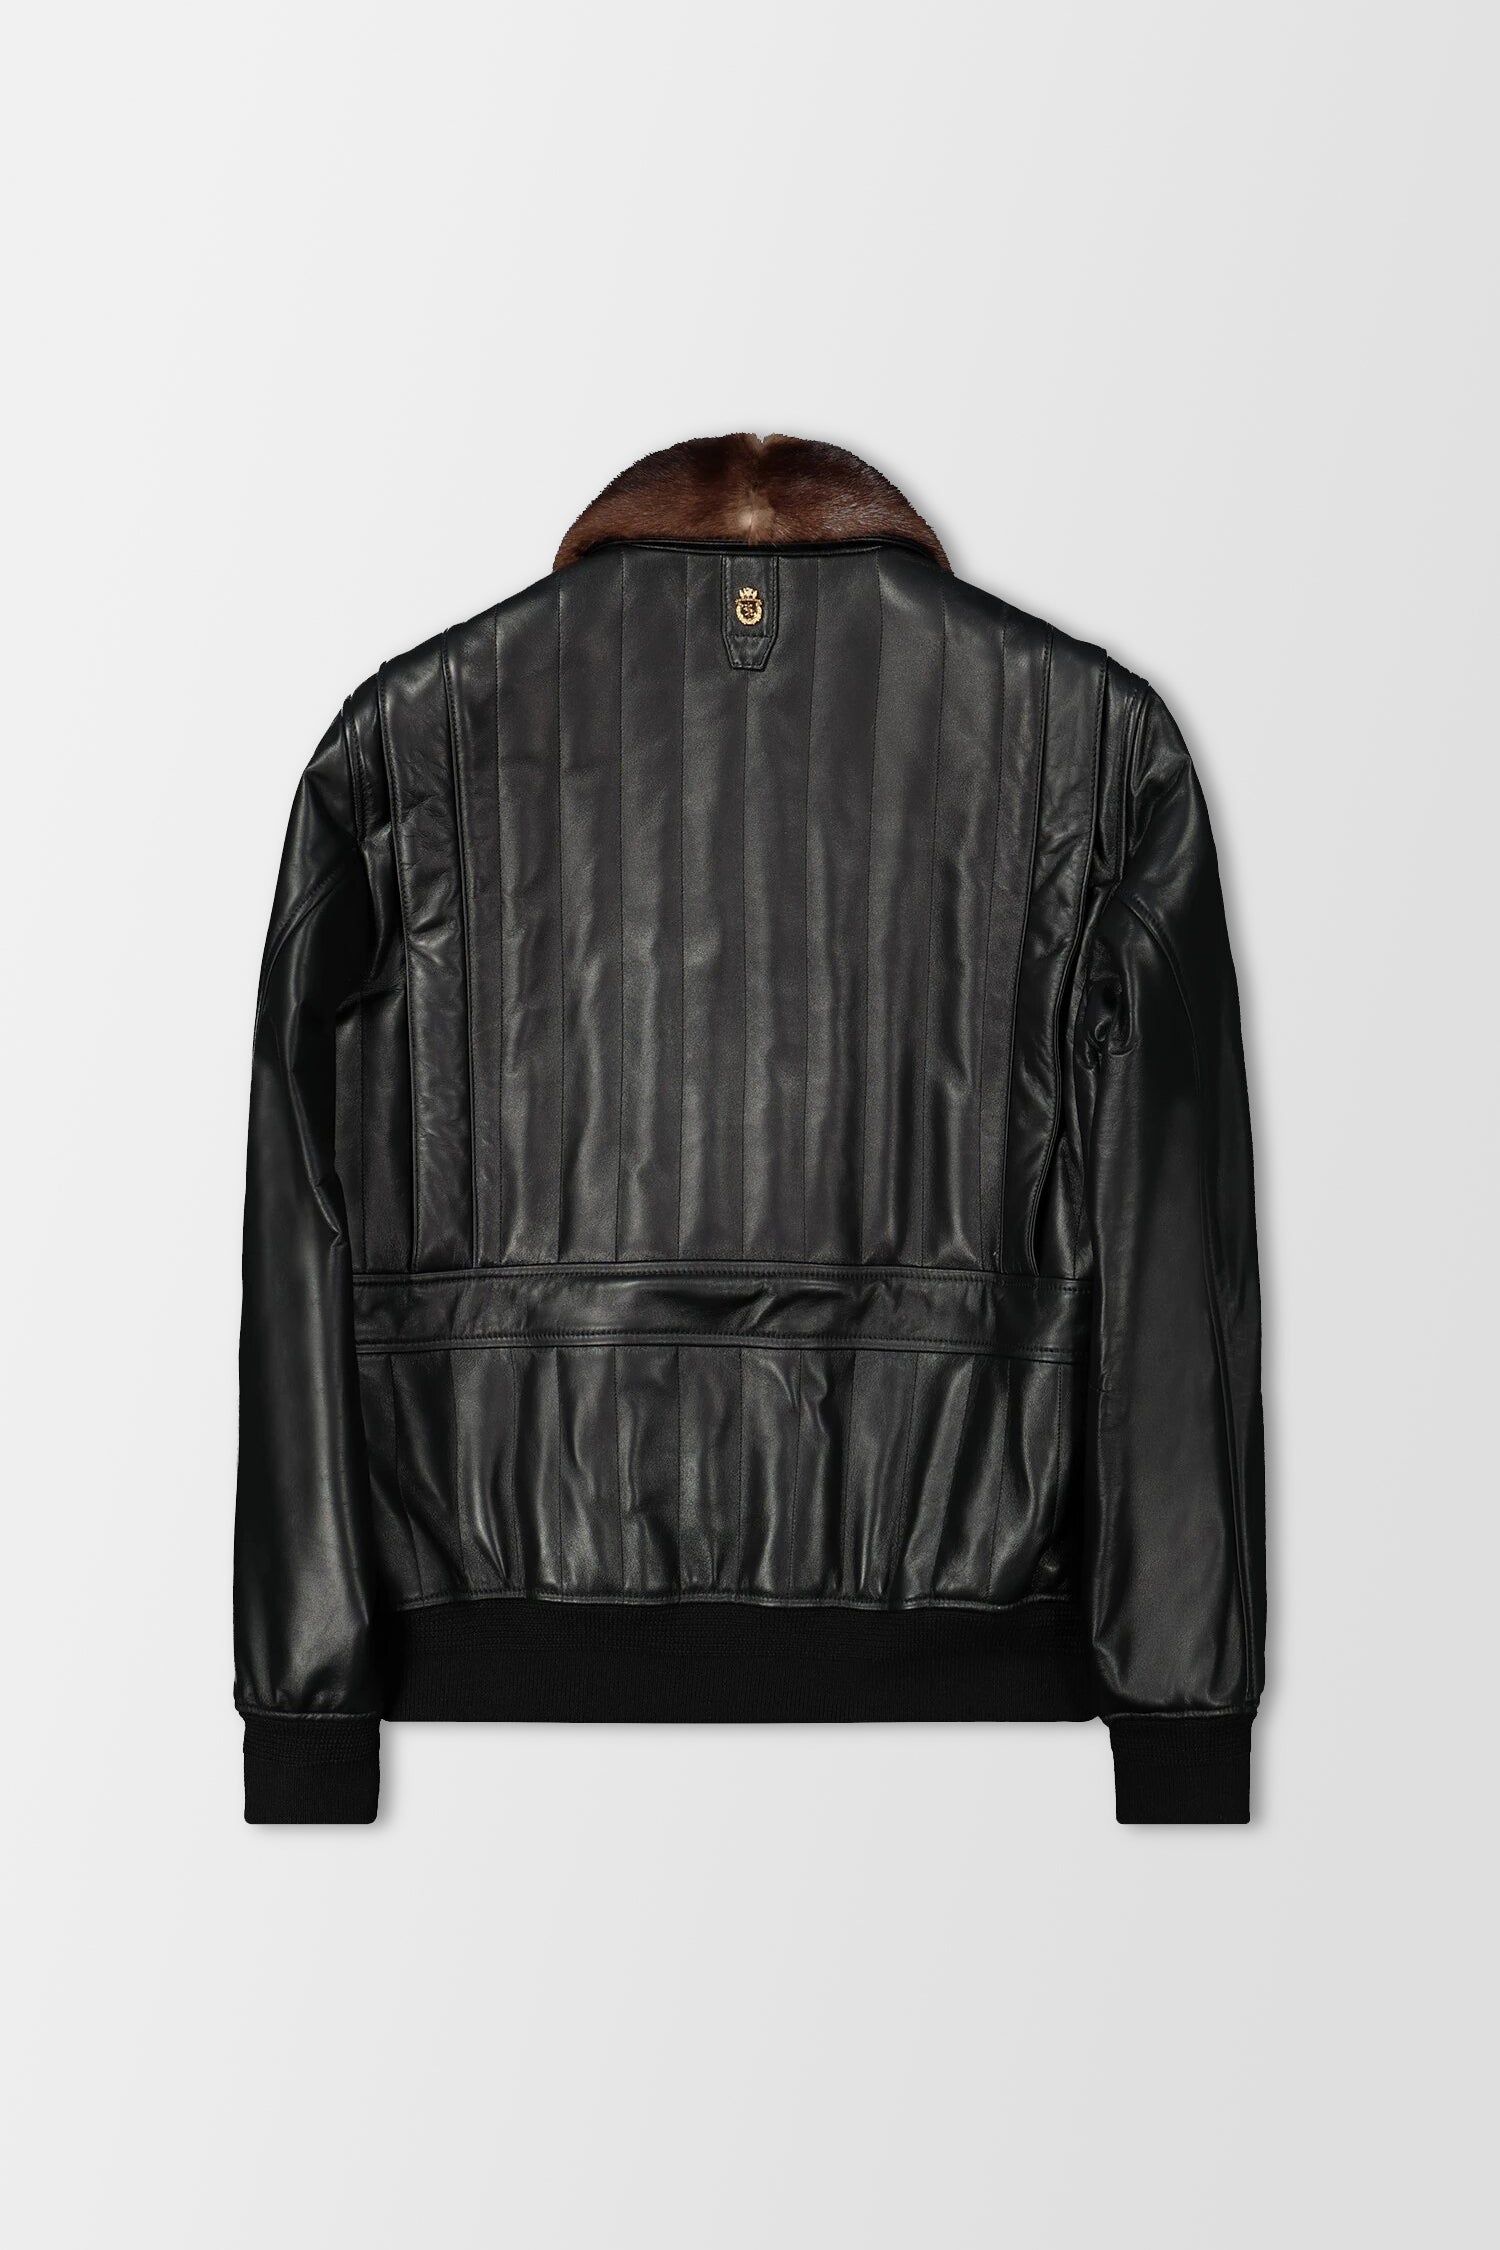 Billionaire Black Leather Jacket